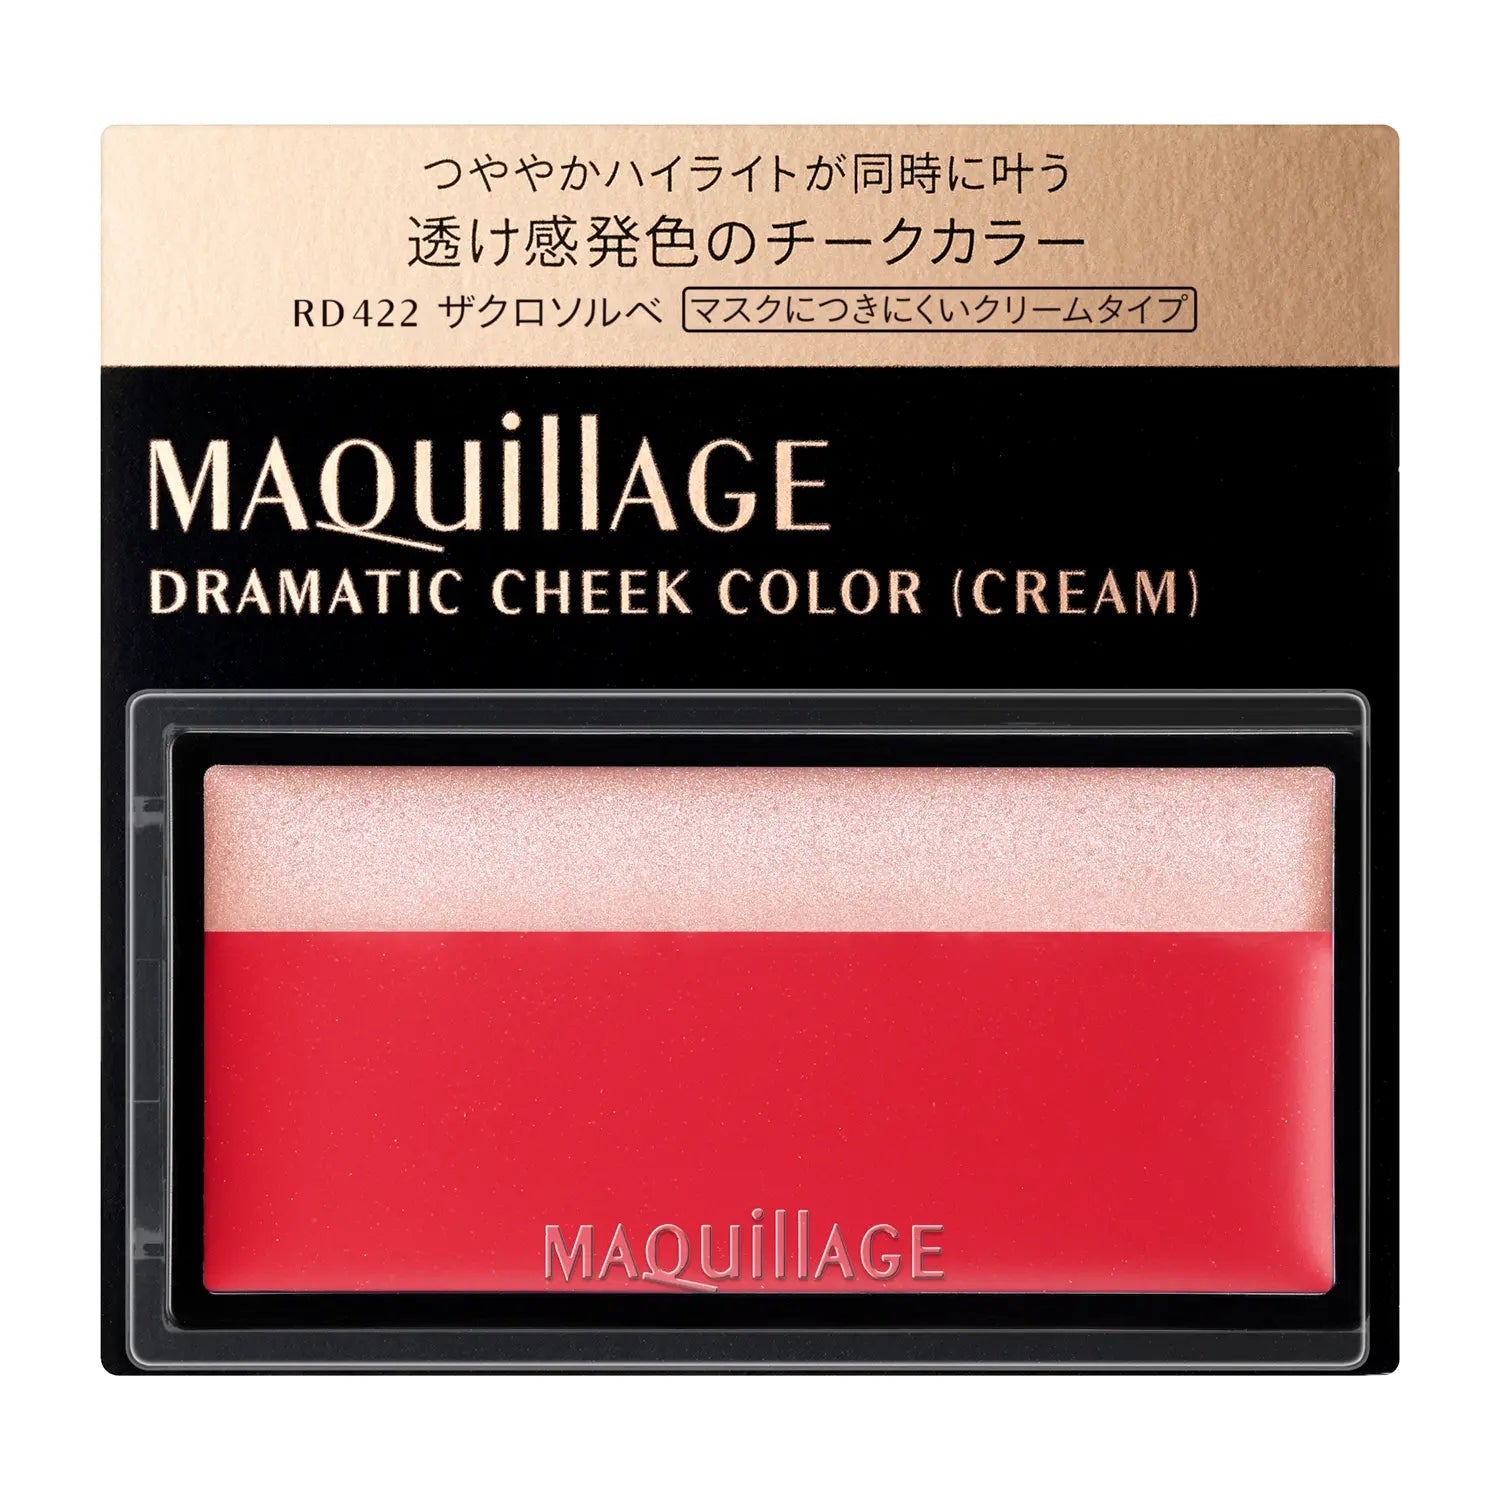 Maquillage Dramatic Cheek Color - Ichiban Mart